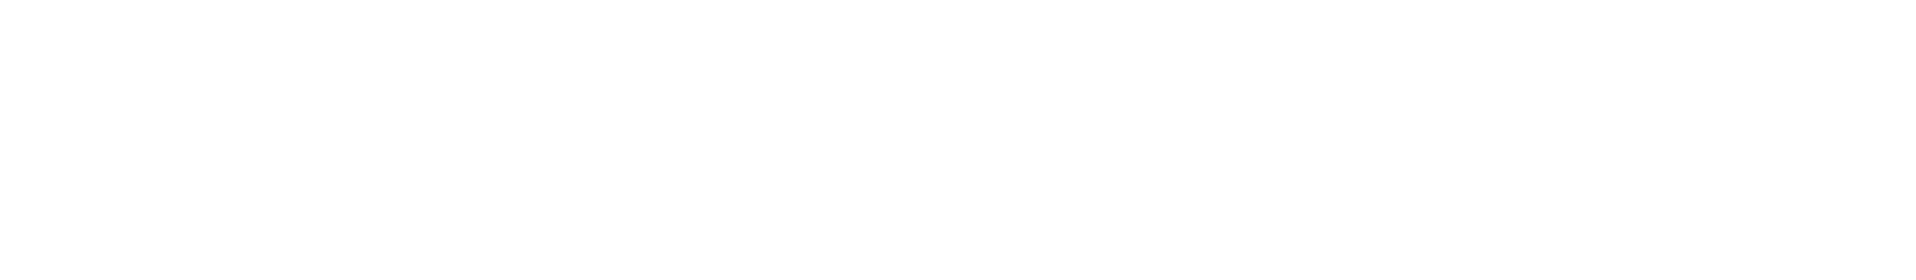 Logo of Arctic-Subarctic Ocean Fluxes